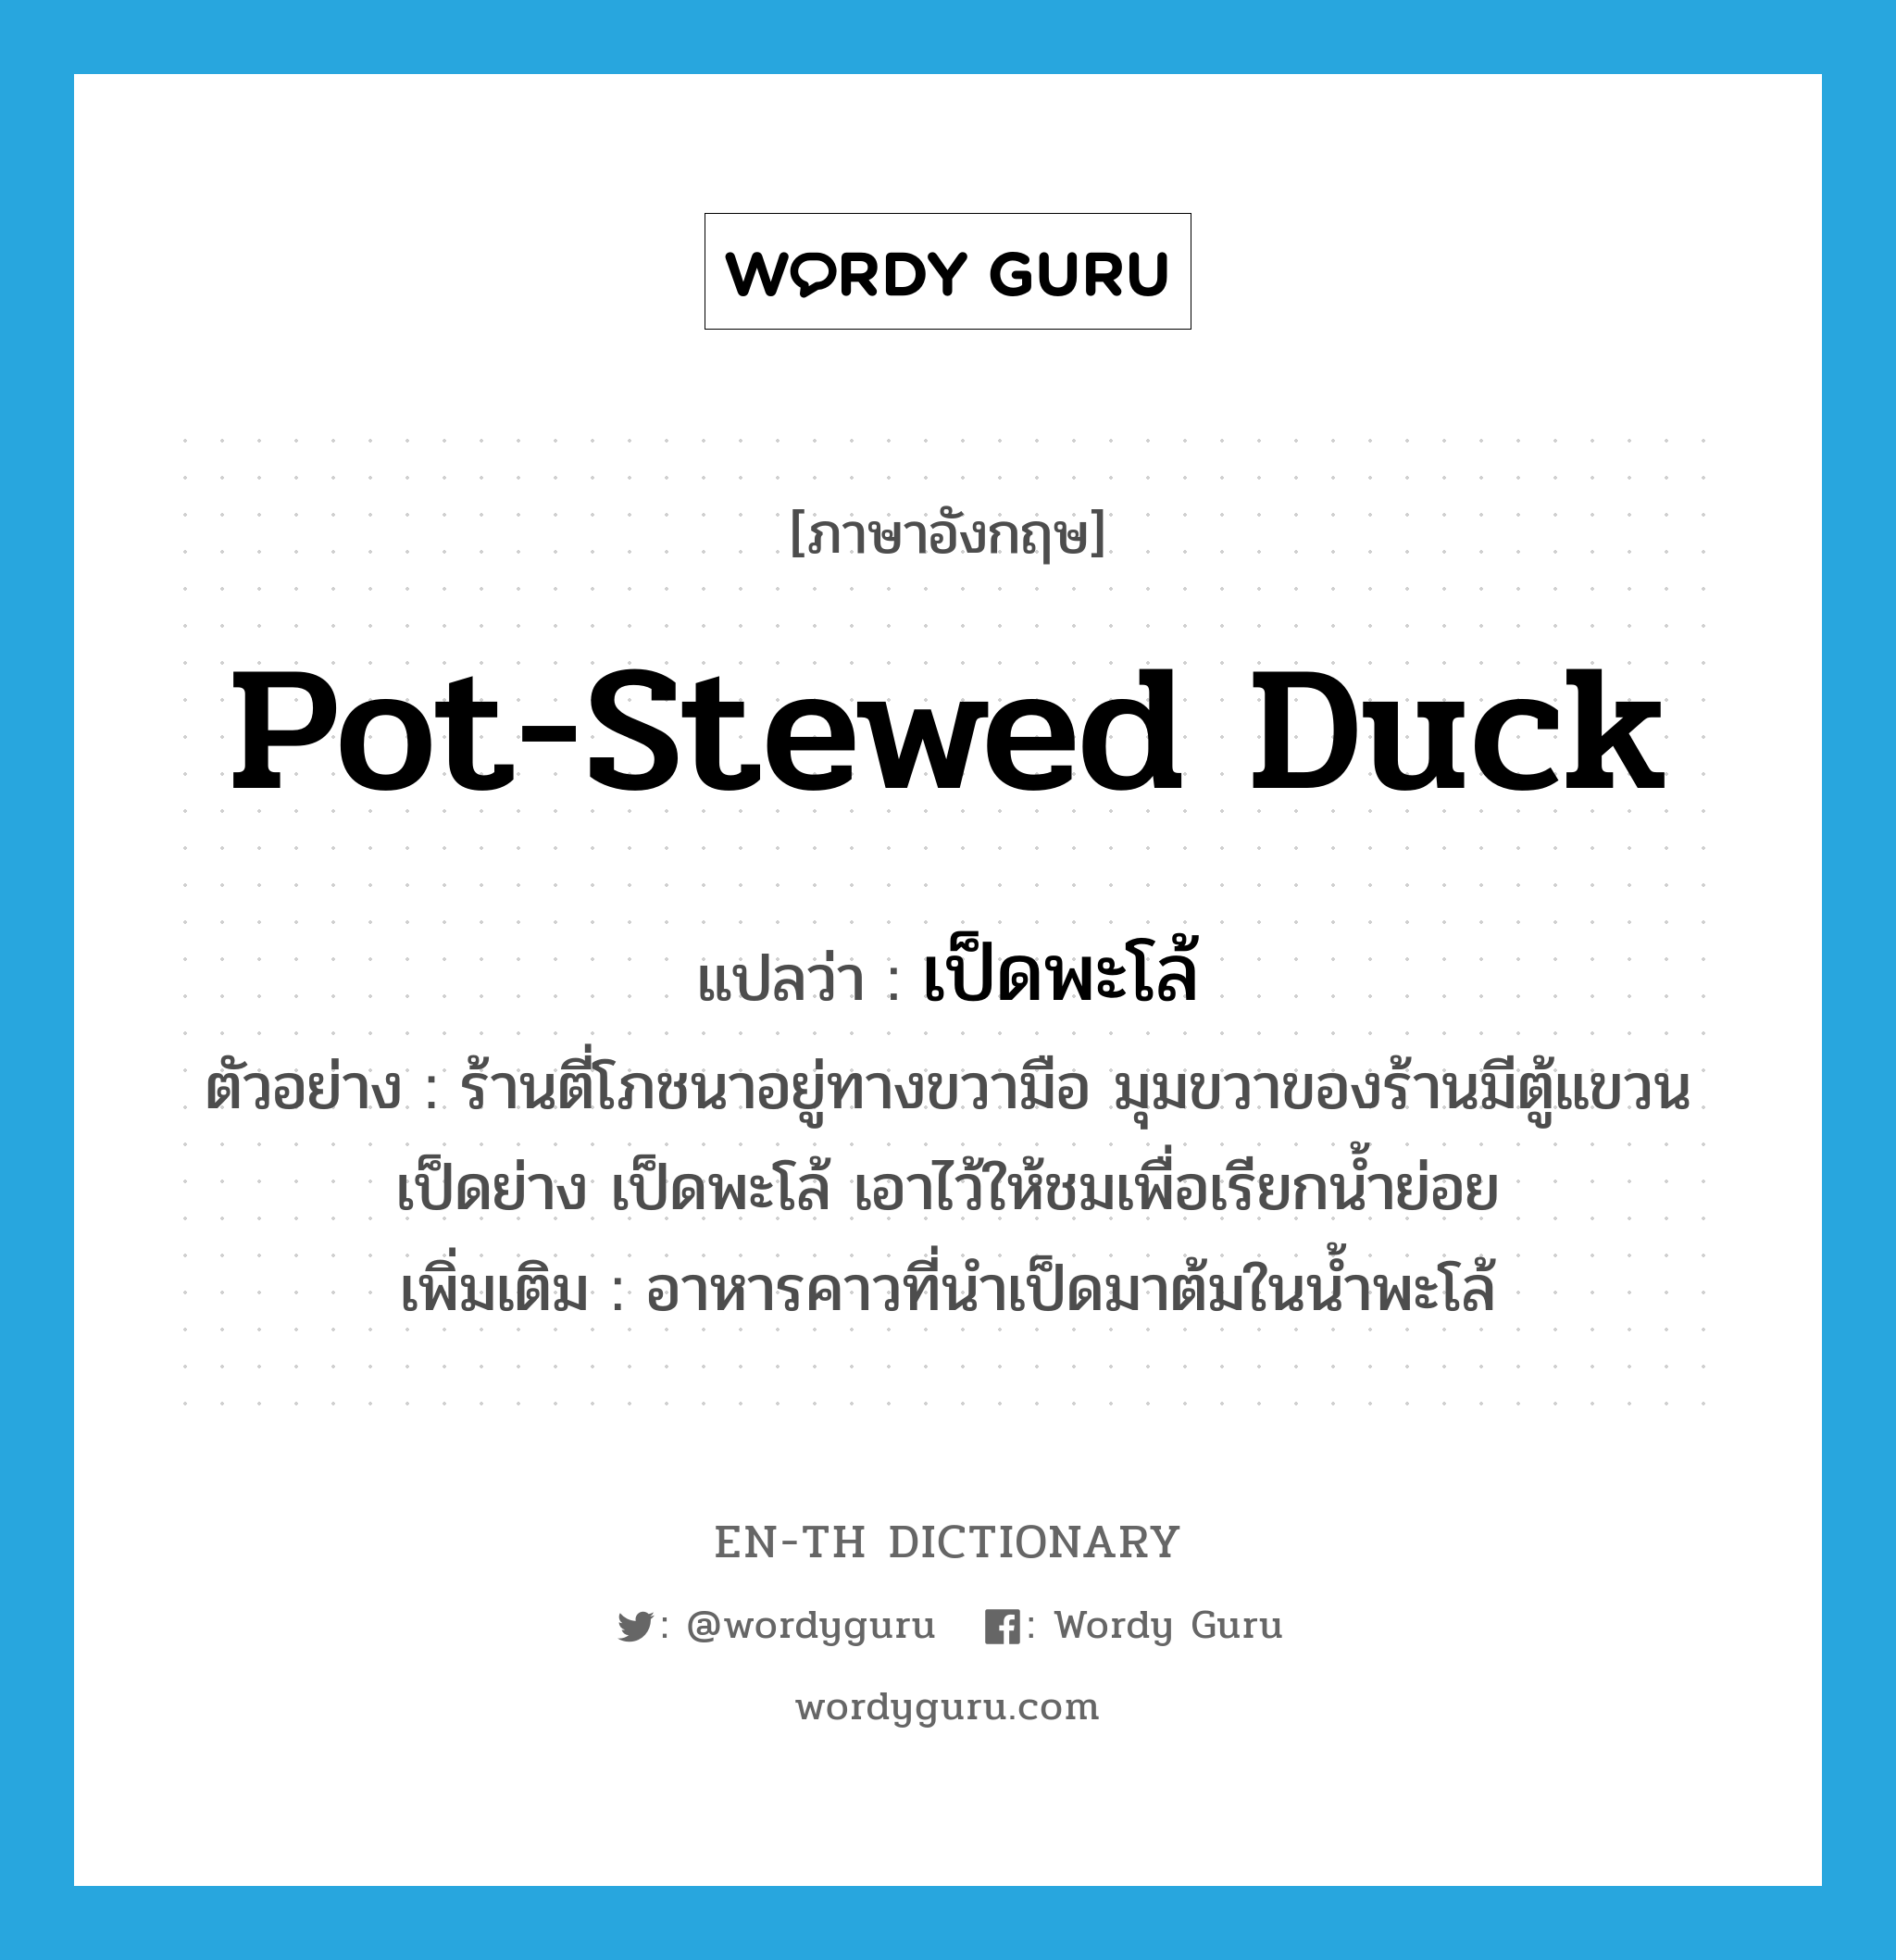 pot-stewed duck แปลว่า?, คำศัพท์ภาษาอังกฤษ pot-stewed duck แปลว่า เป็ดพะโล้ ประเภท N ตัวอย่าง ร้านตี่โภชนาอยู่ทางขวามือ มุมขวาของร้านมีตู้แขวนเป็ดย่าง เป็ดพะโล้ เอาไว้ให้ชมเพื่อเรียกนํ้าย่อย เพิ่มเติม อาหารคาวที่นำเป็ดมาต้มในน้ำพะโล้ หมวด N